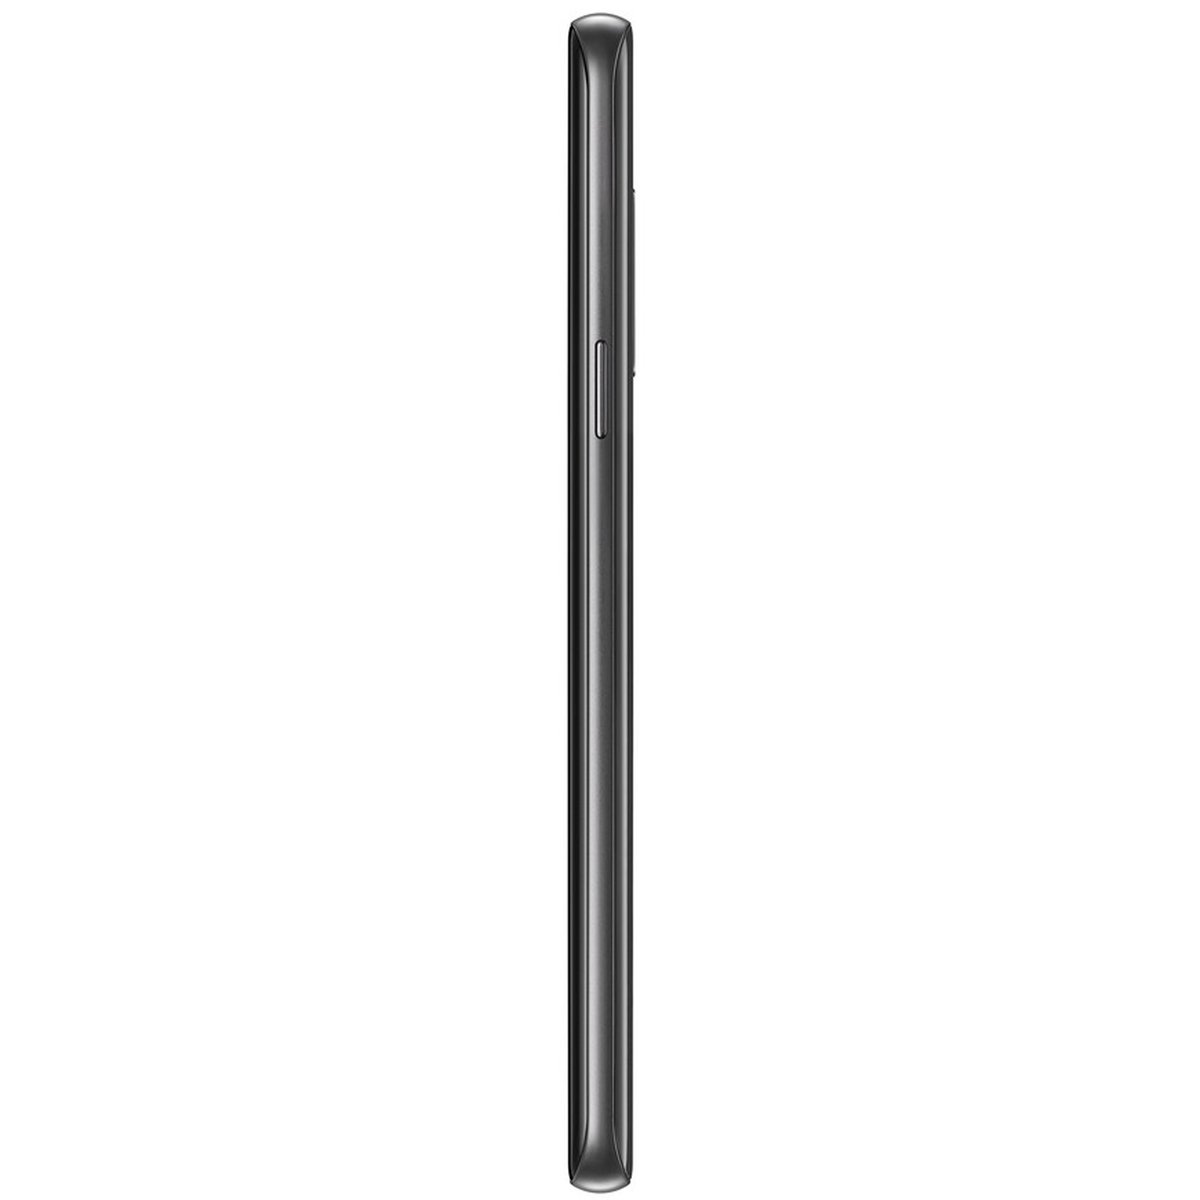 Samsung Galaxy S9 SMG960 256GB 4G Titanium Gray